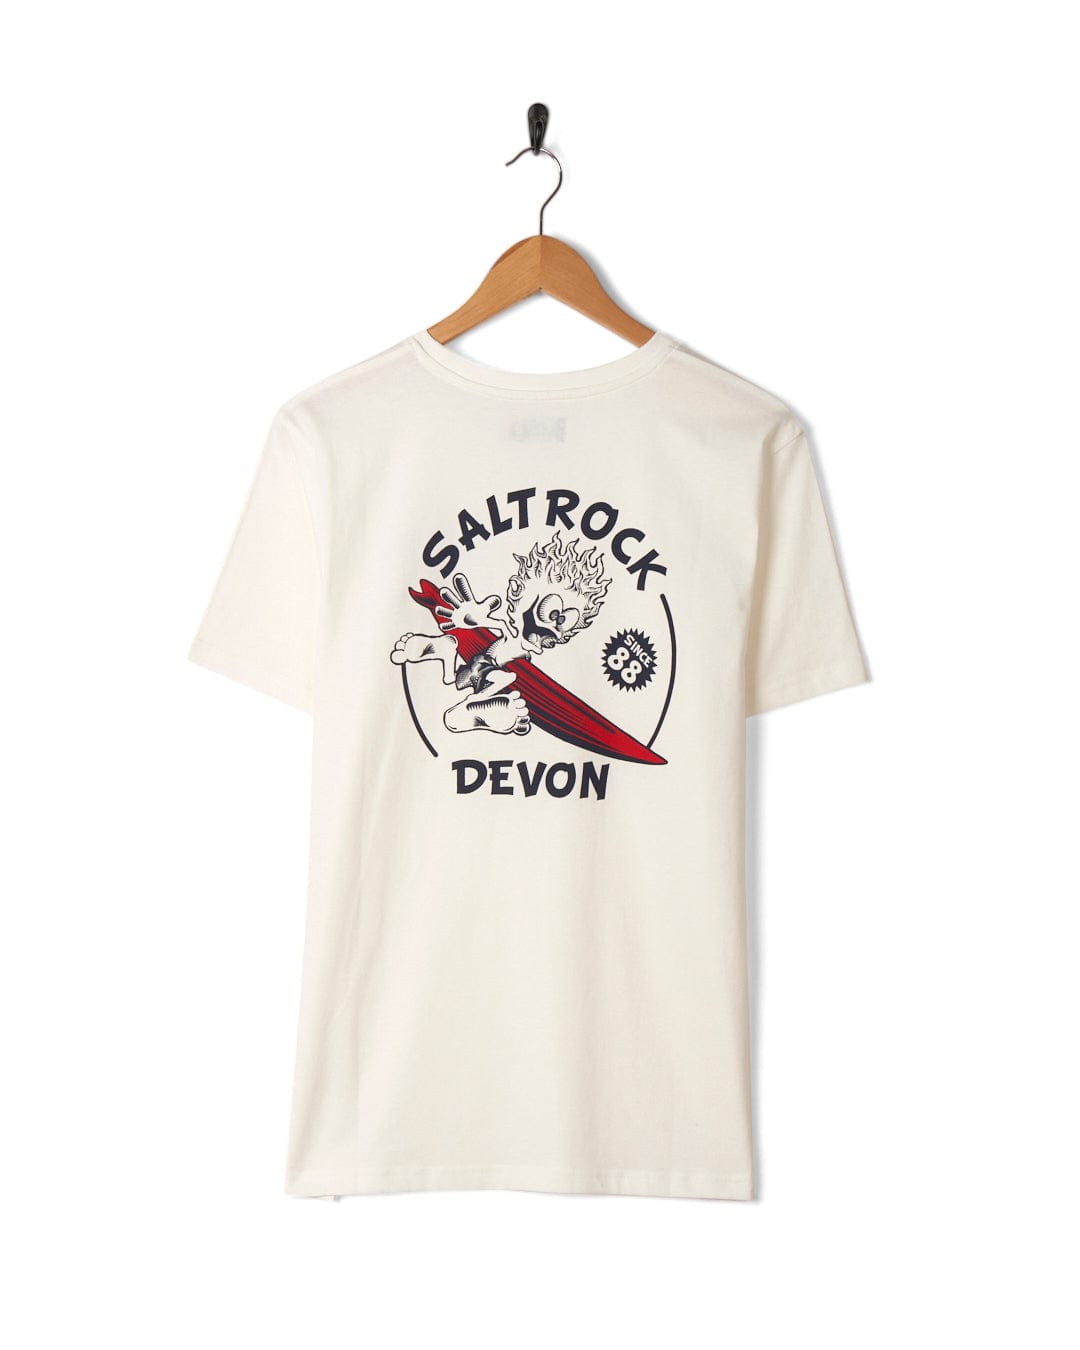 A Wave Rider Devon - Mens Short Sleeve T-Shirt - White by Saltrock for the beach goer.